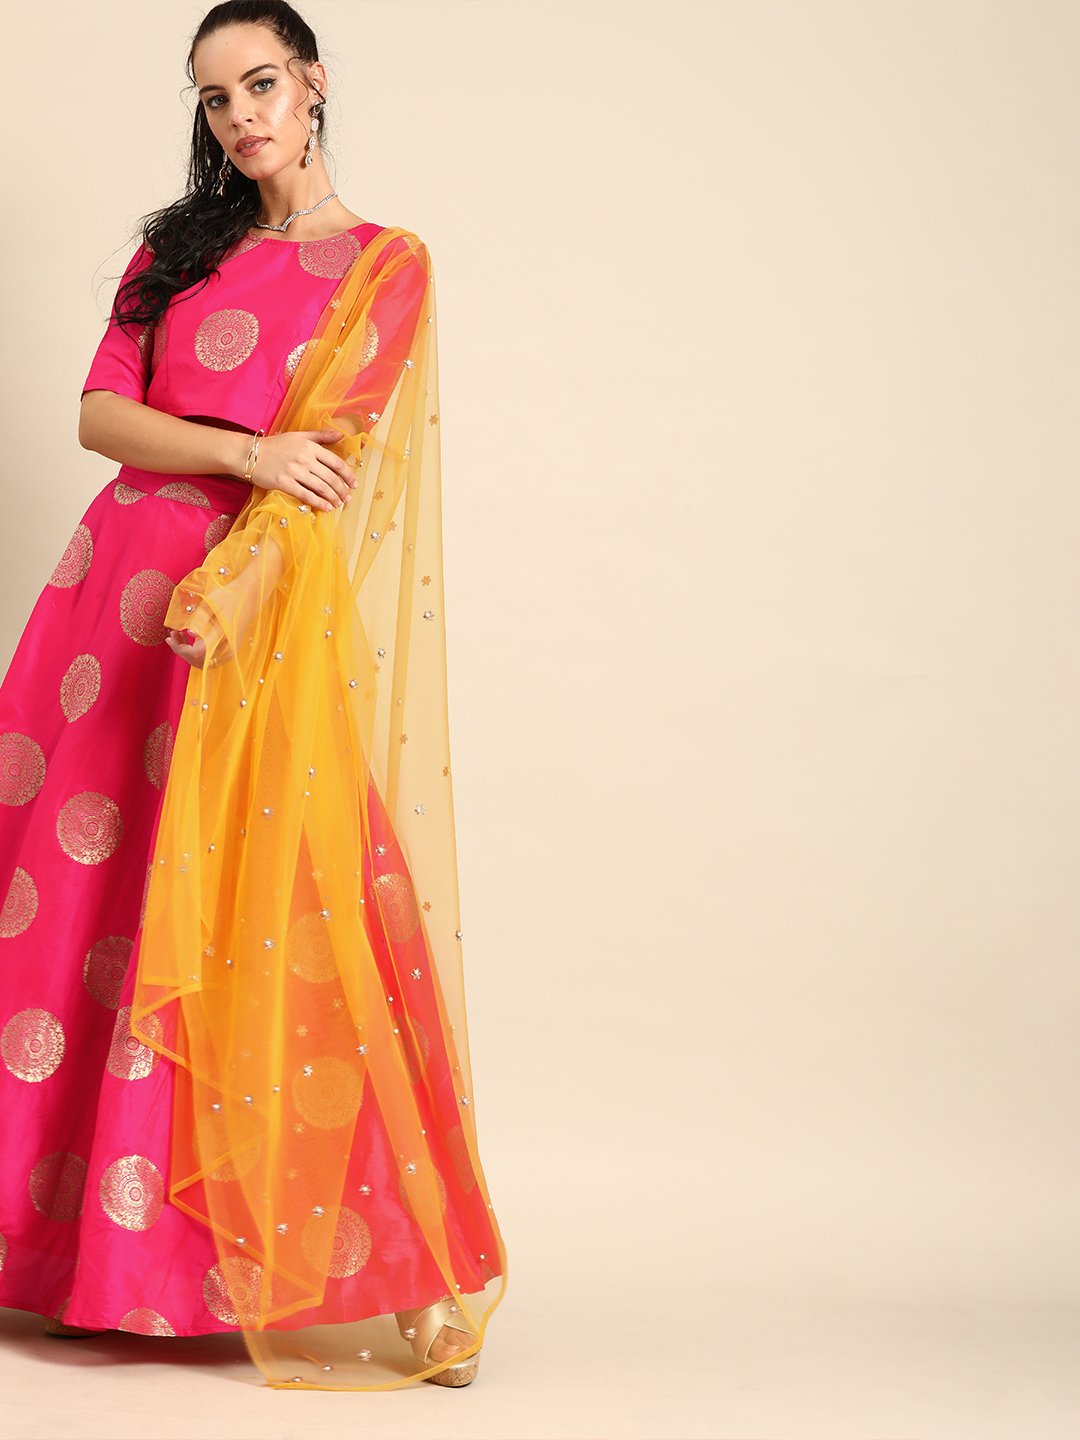 Women's Nayo Pink Broked Jaqard Lehenga Choli With Dupatta - Nayo Clothing